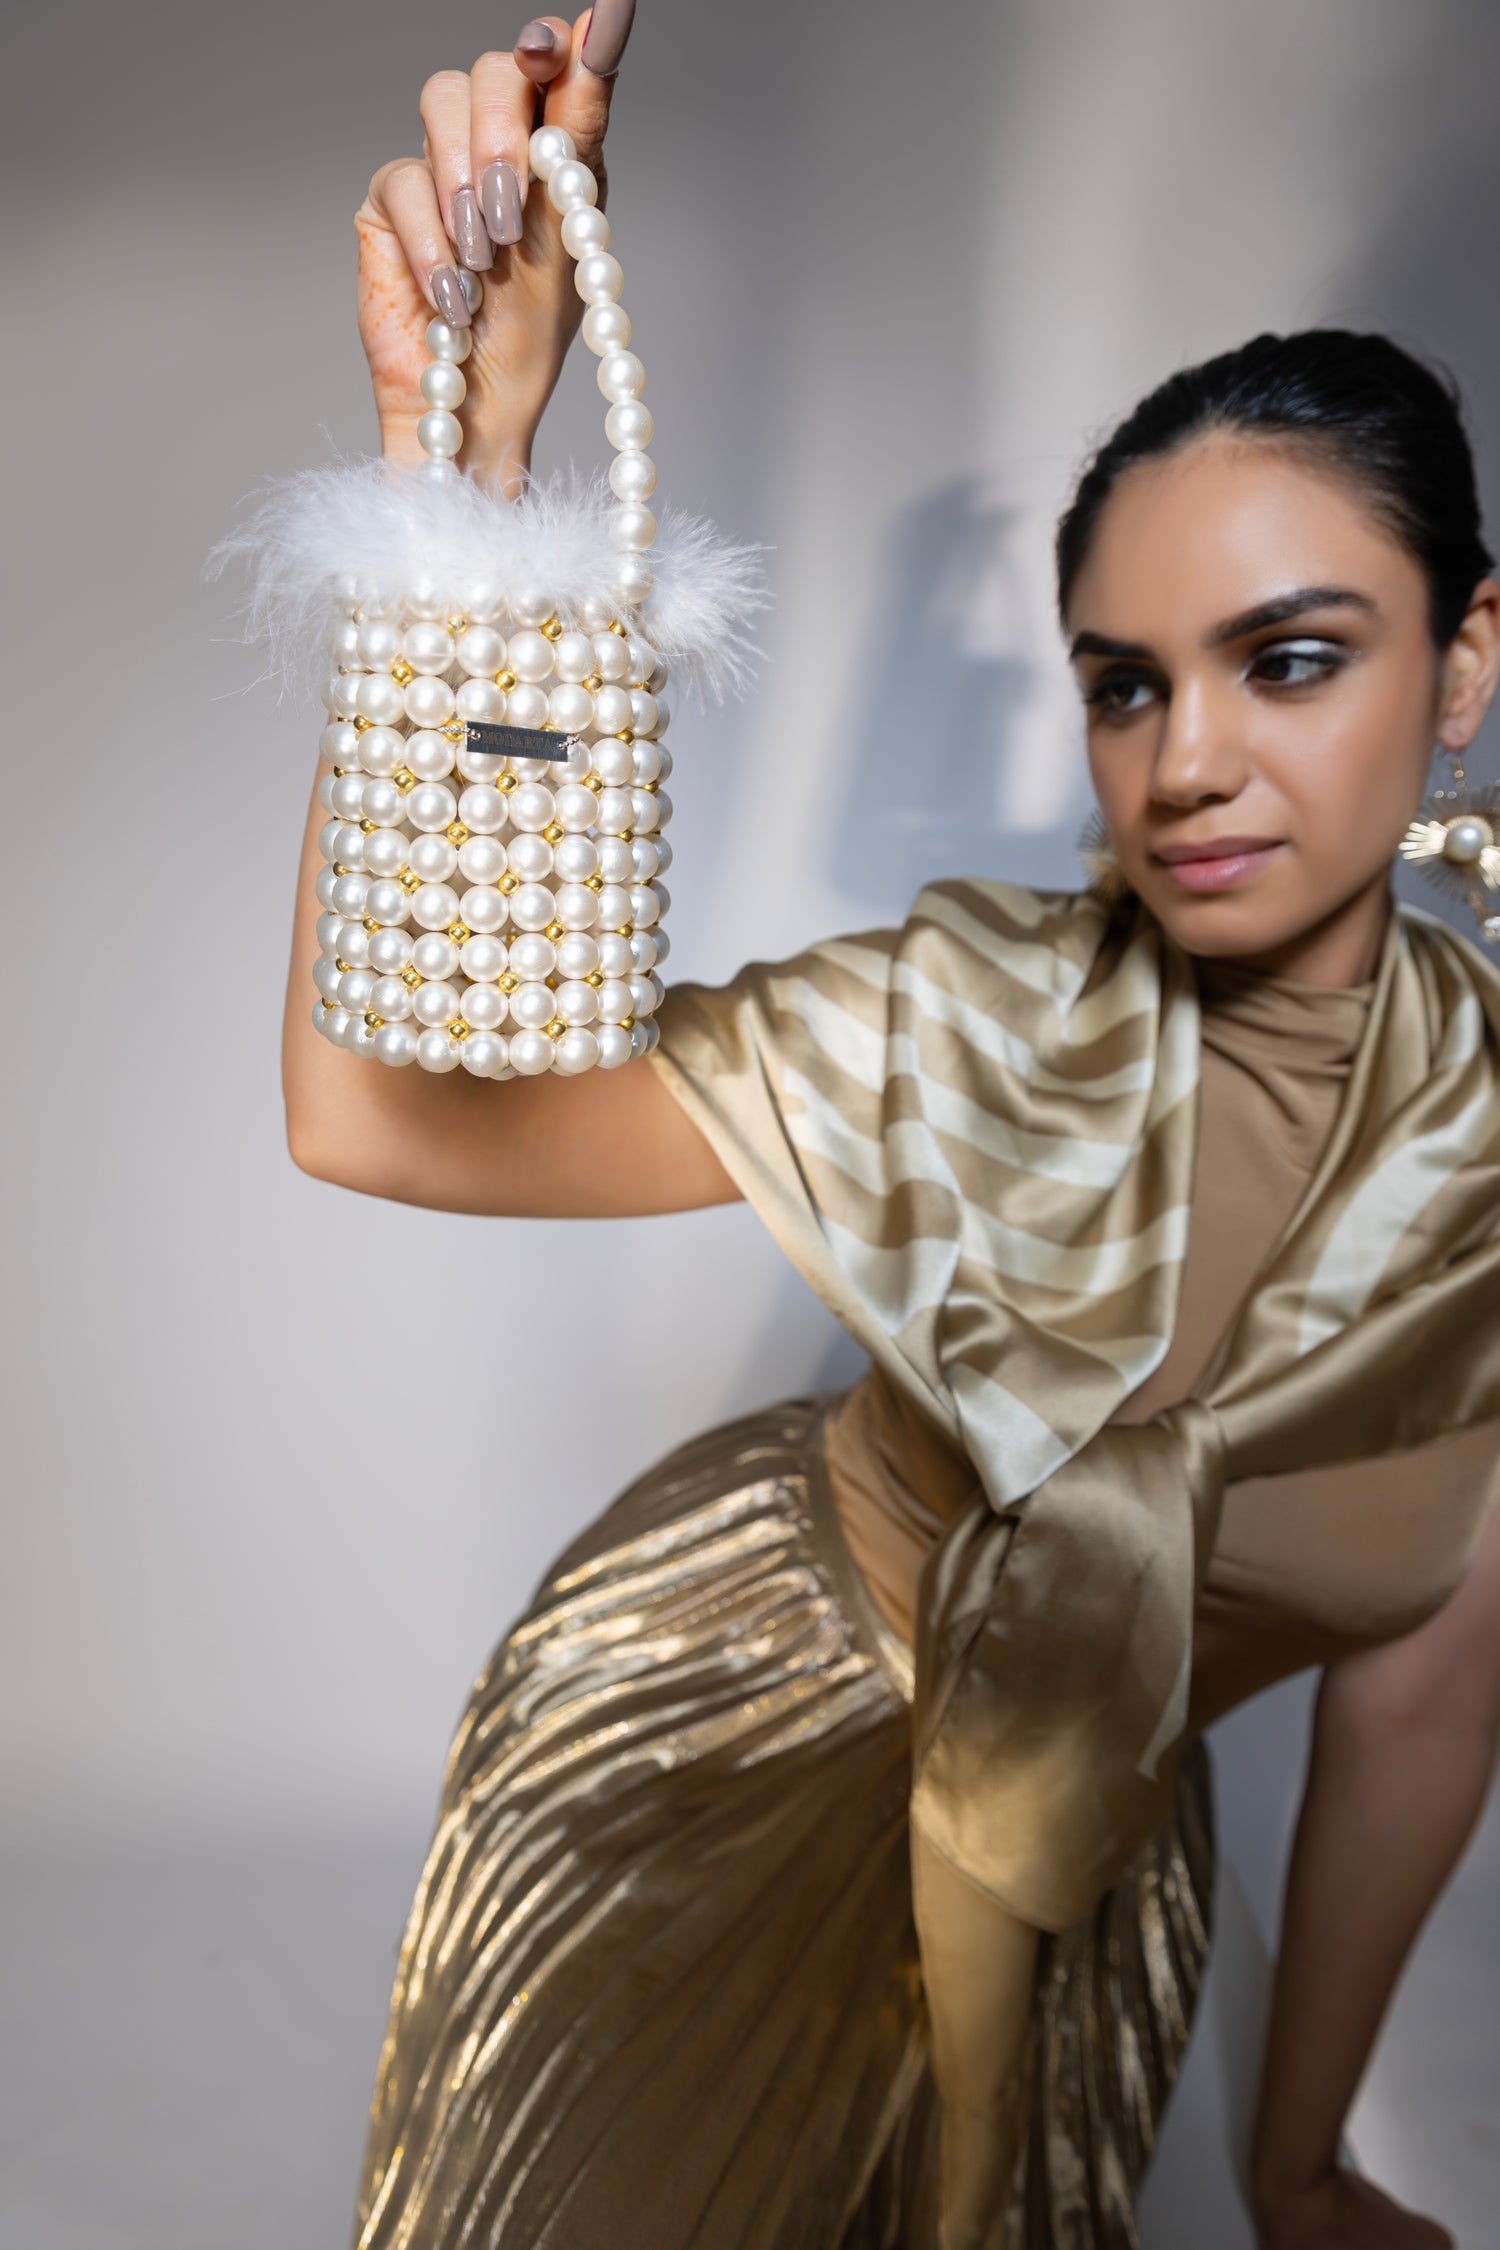 100 Pcs Indian Handmade Pouch Bags Potli Purse Bag for Gift Brocade Art  Silk Drawstring Baby Shower Wedding Party Christmas Favors Bag - Etsy |  Potli bags, Wedding bag, Embroidered clutch purse